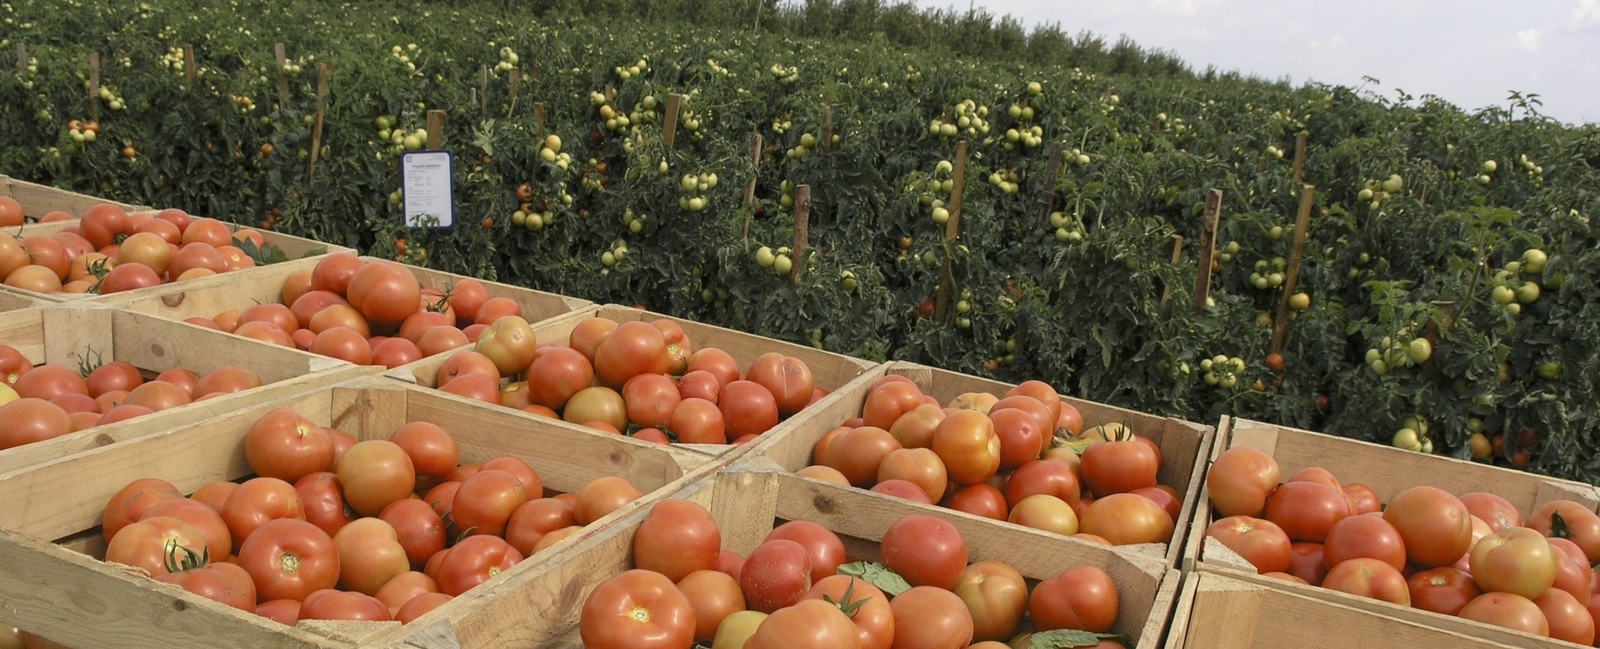 Producción mundial de tomates